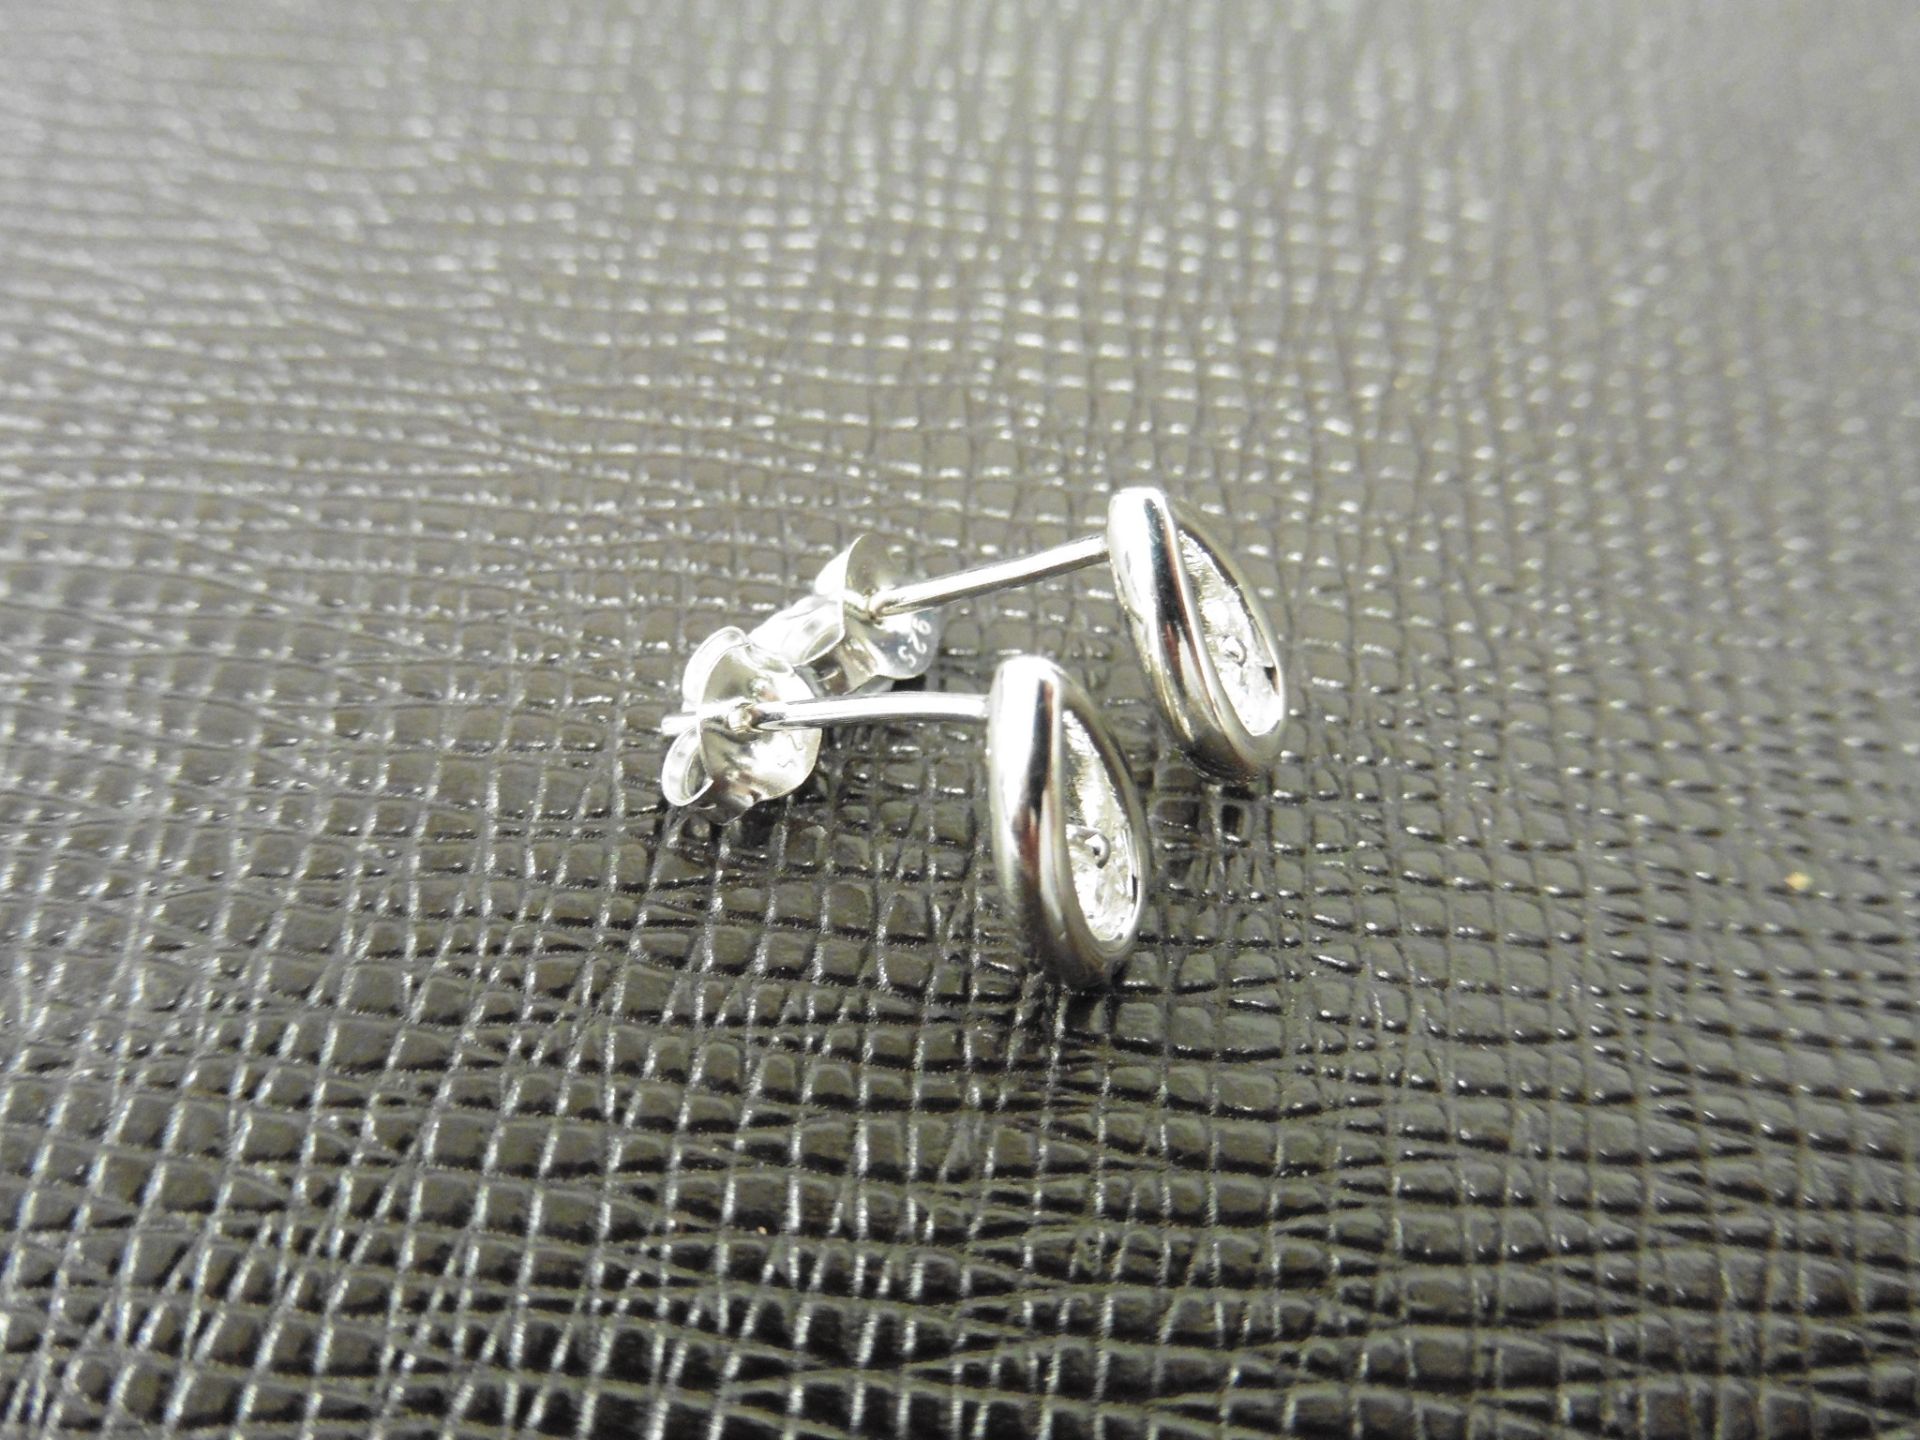 0.20ct diamond earrings set in platinum 950. 2 small brilliant cut diamonds, H/I colourand si2 - Image 2 of 3